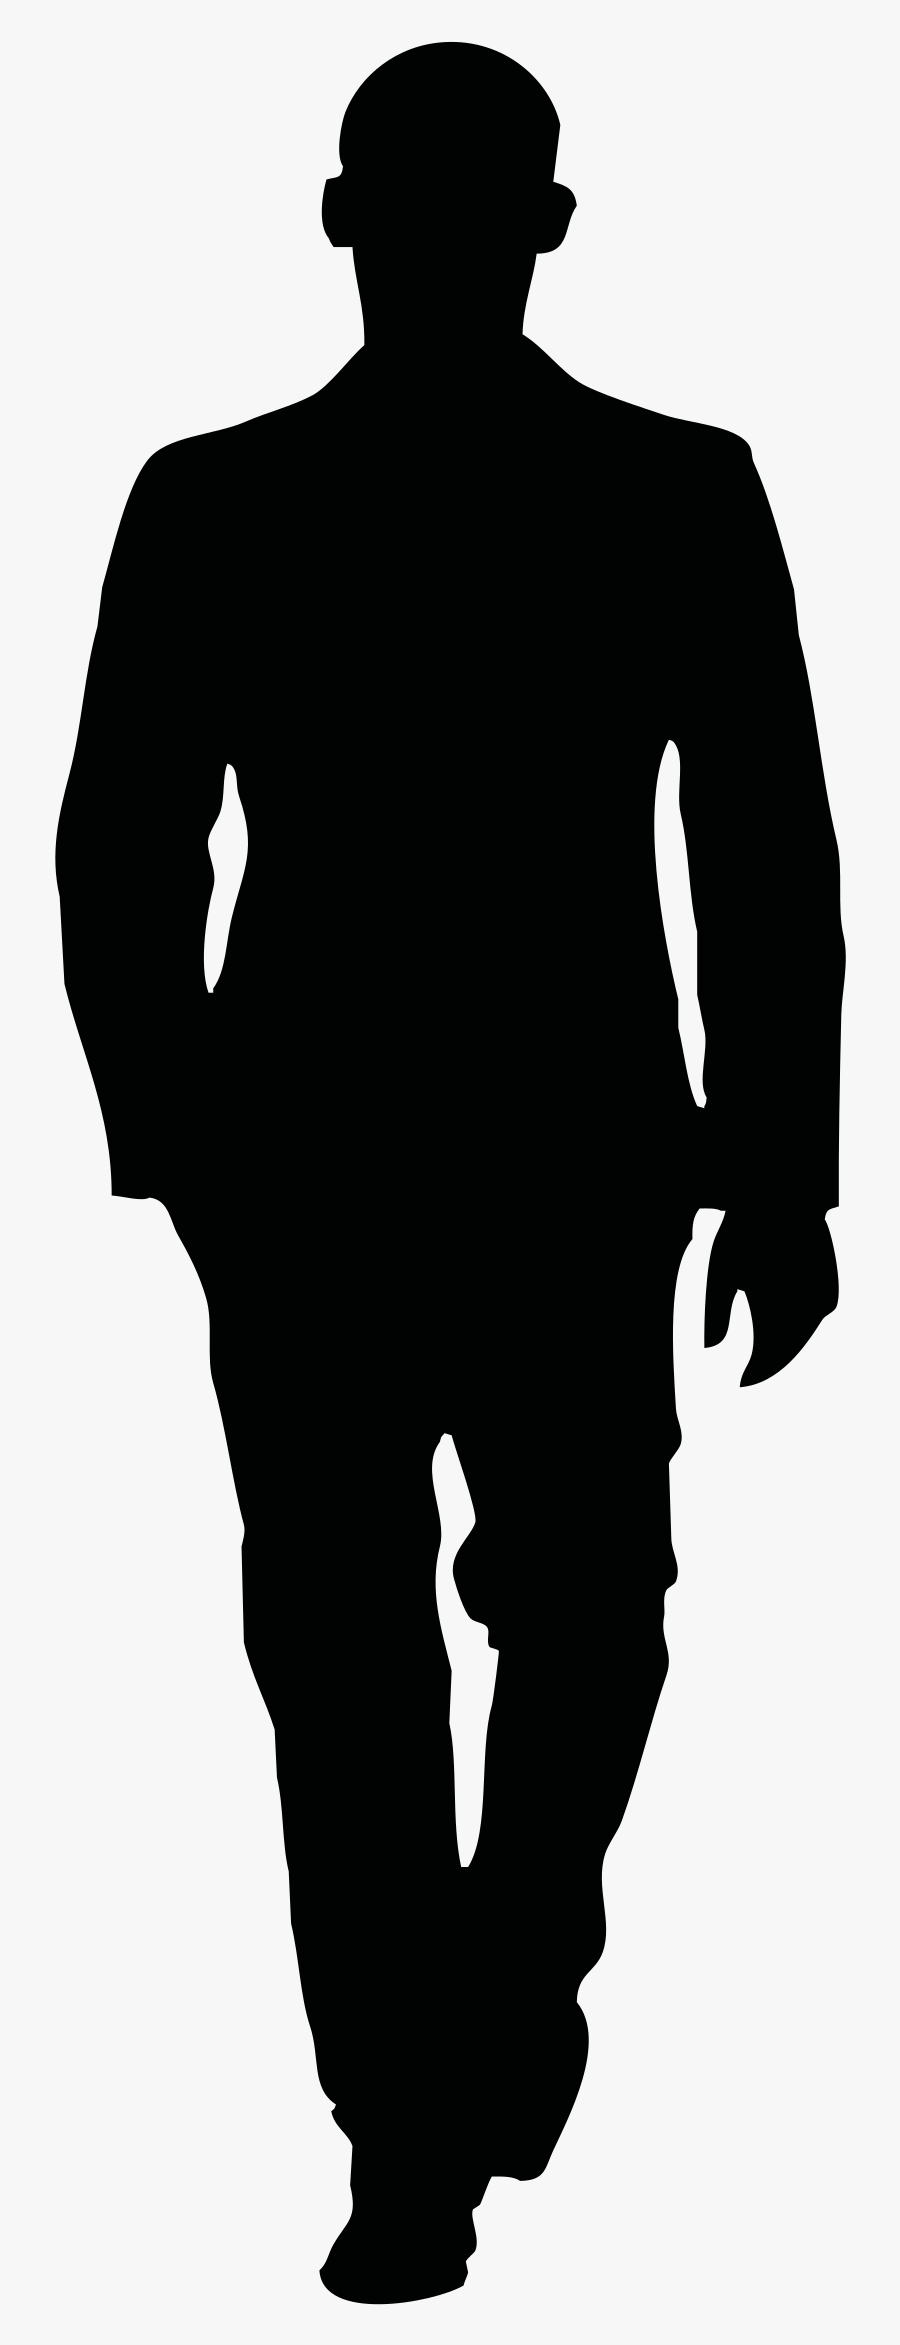 Walking Man Silhouette Png, Transparent Clipart